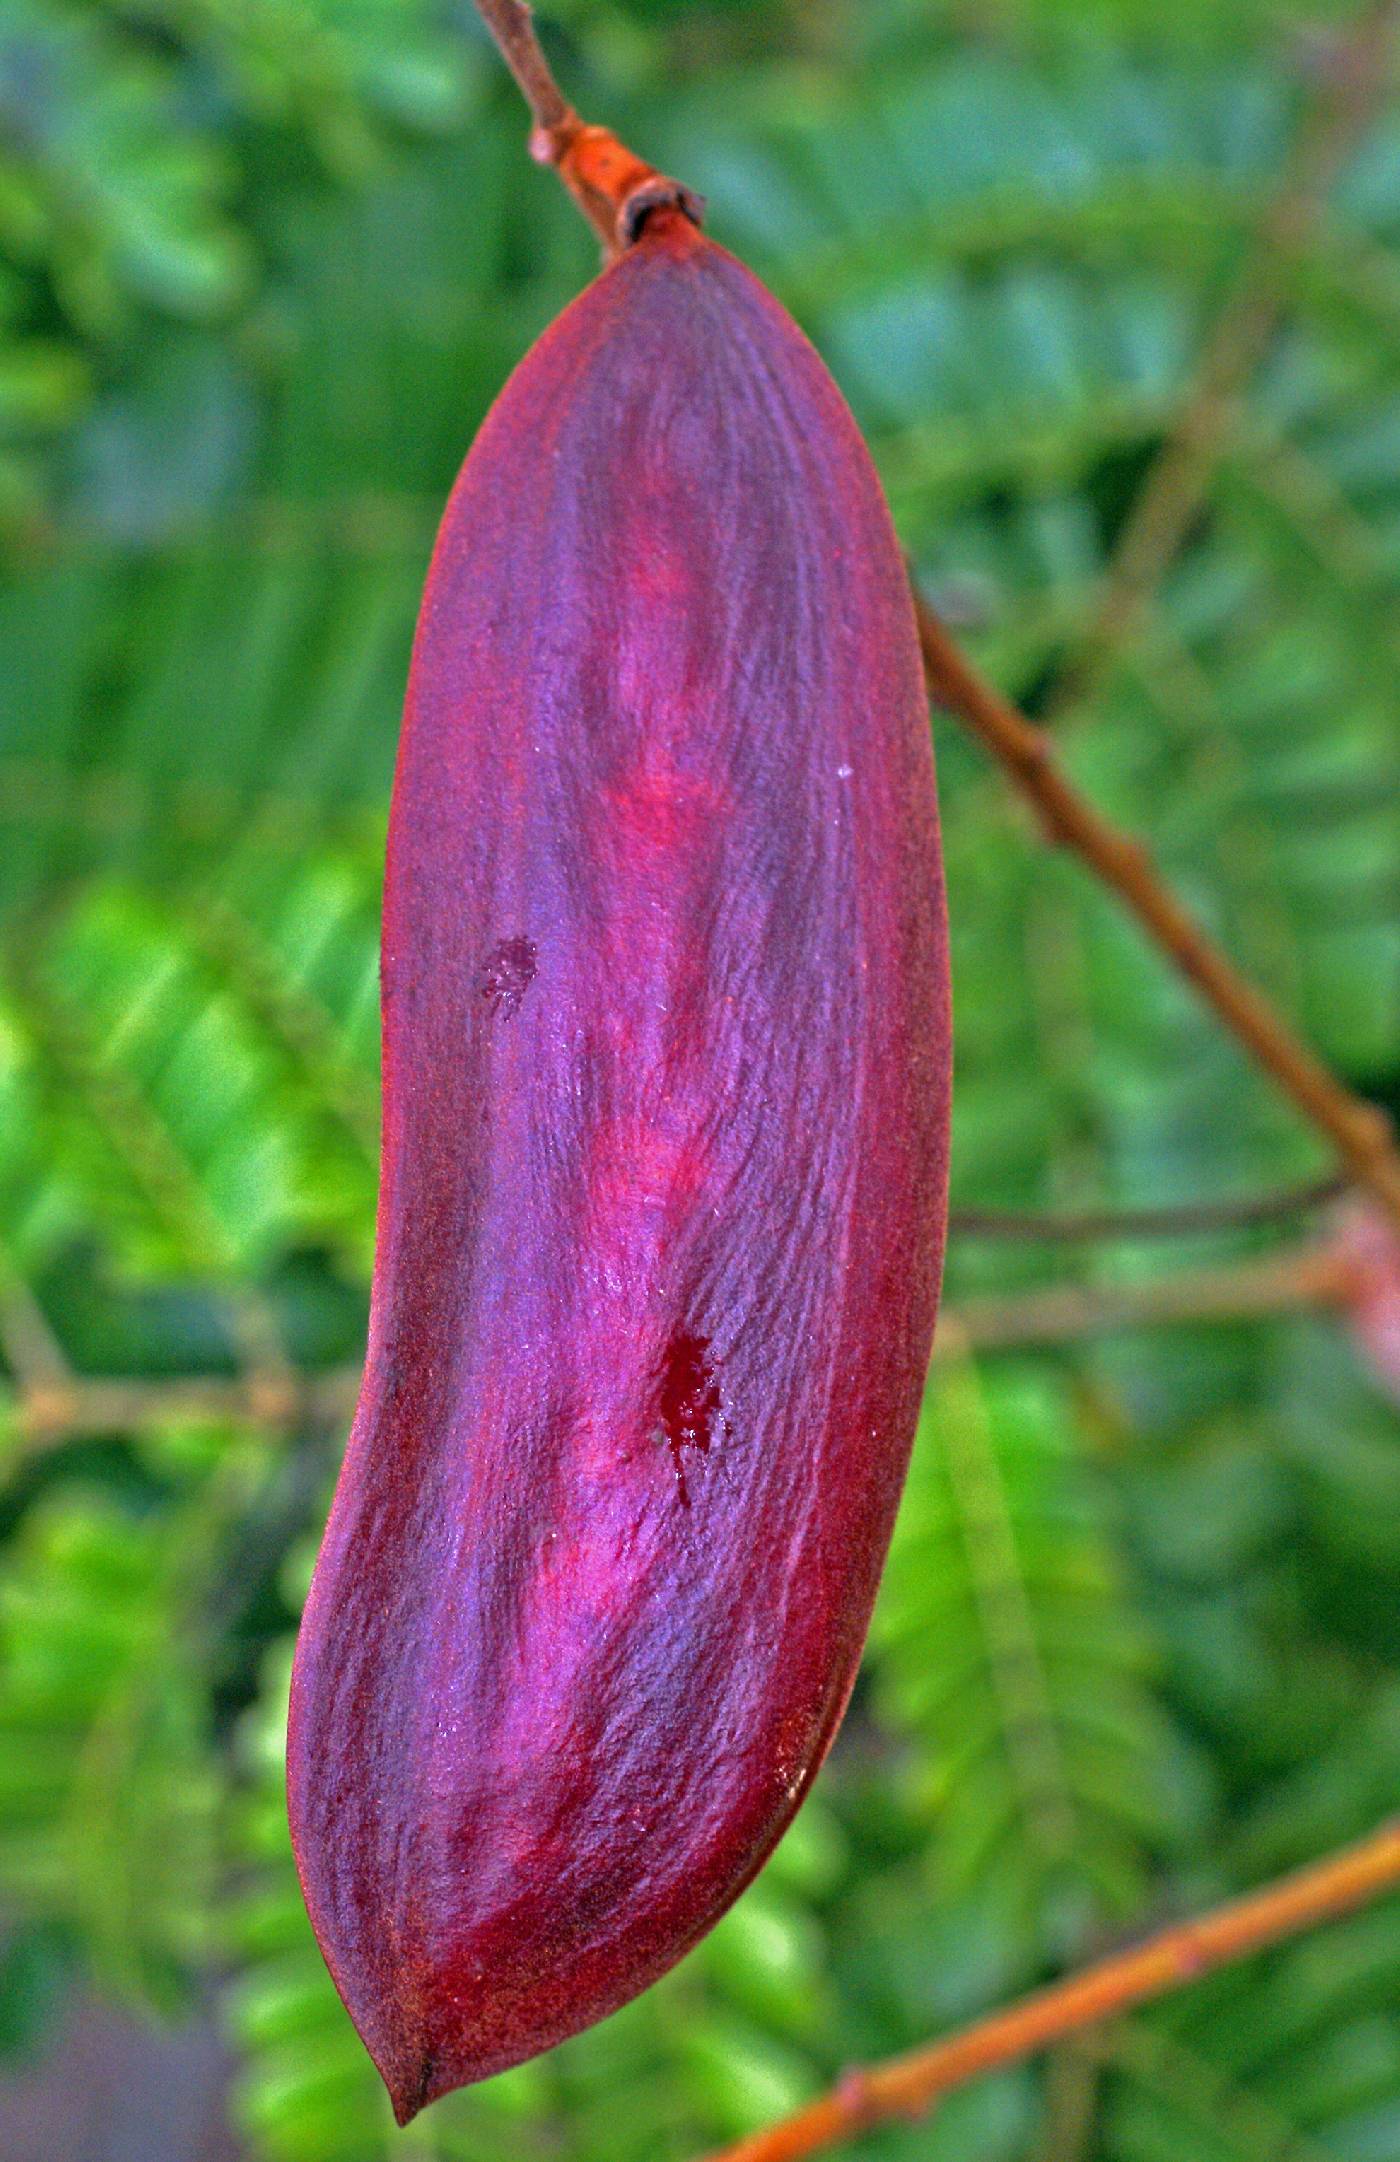 Peltophorum pterocarpum image